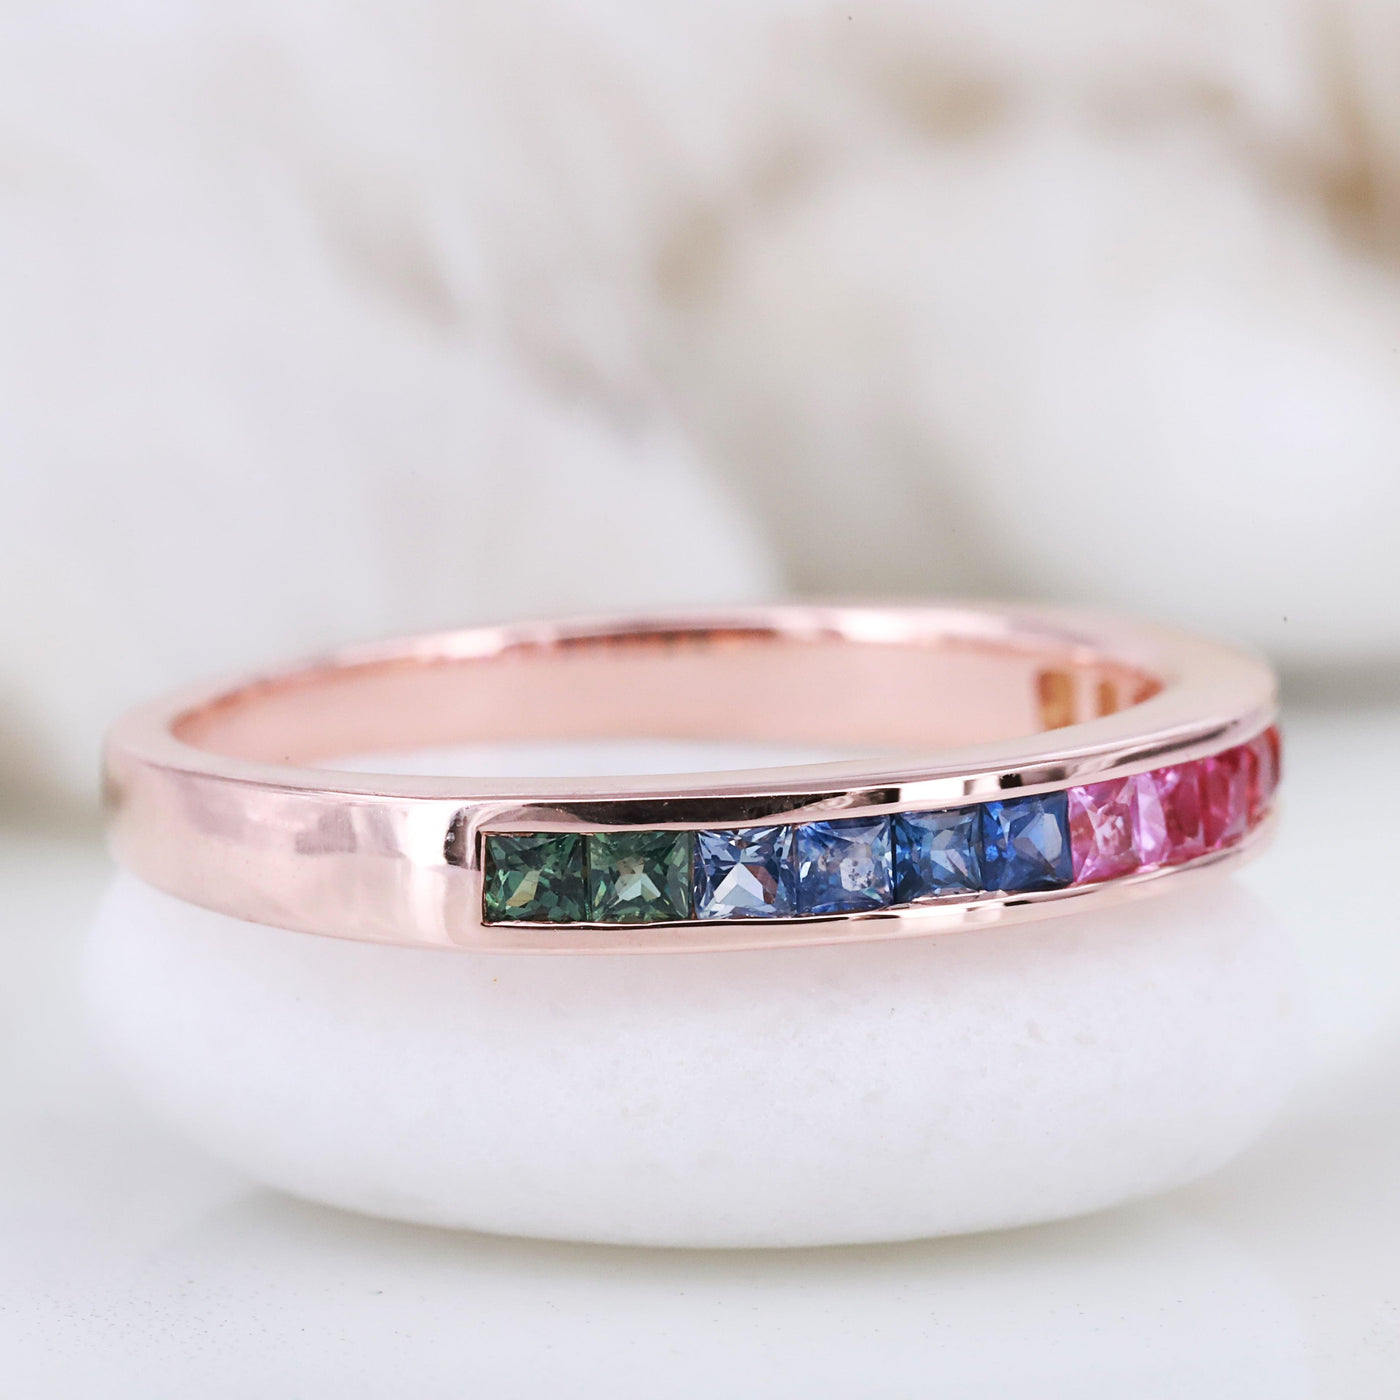 Multi-color Sapphire Ring Rainbow sapphire half eternity ring band fine jewelry